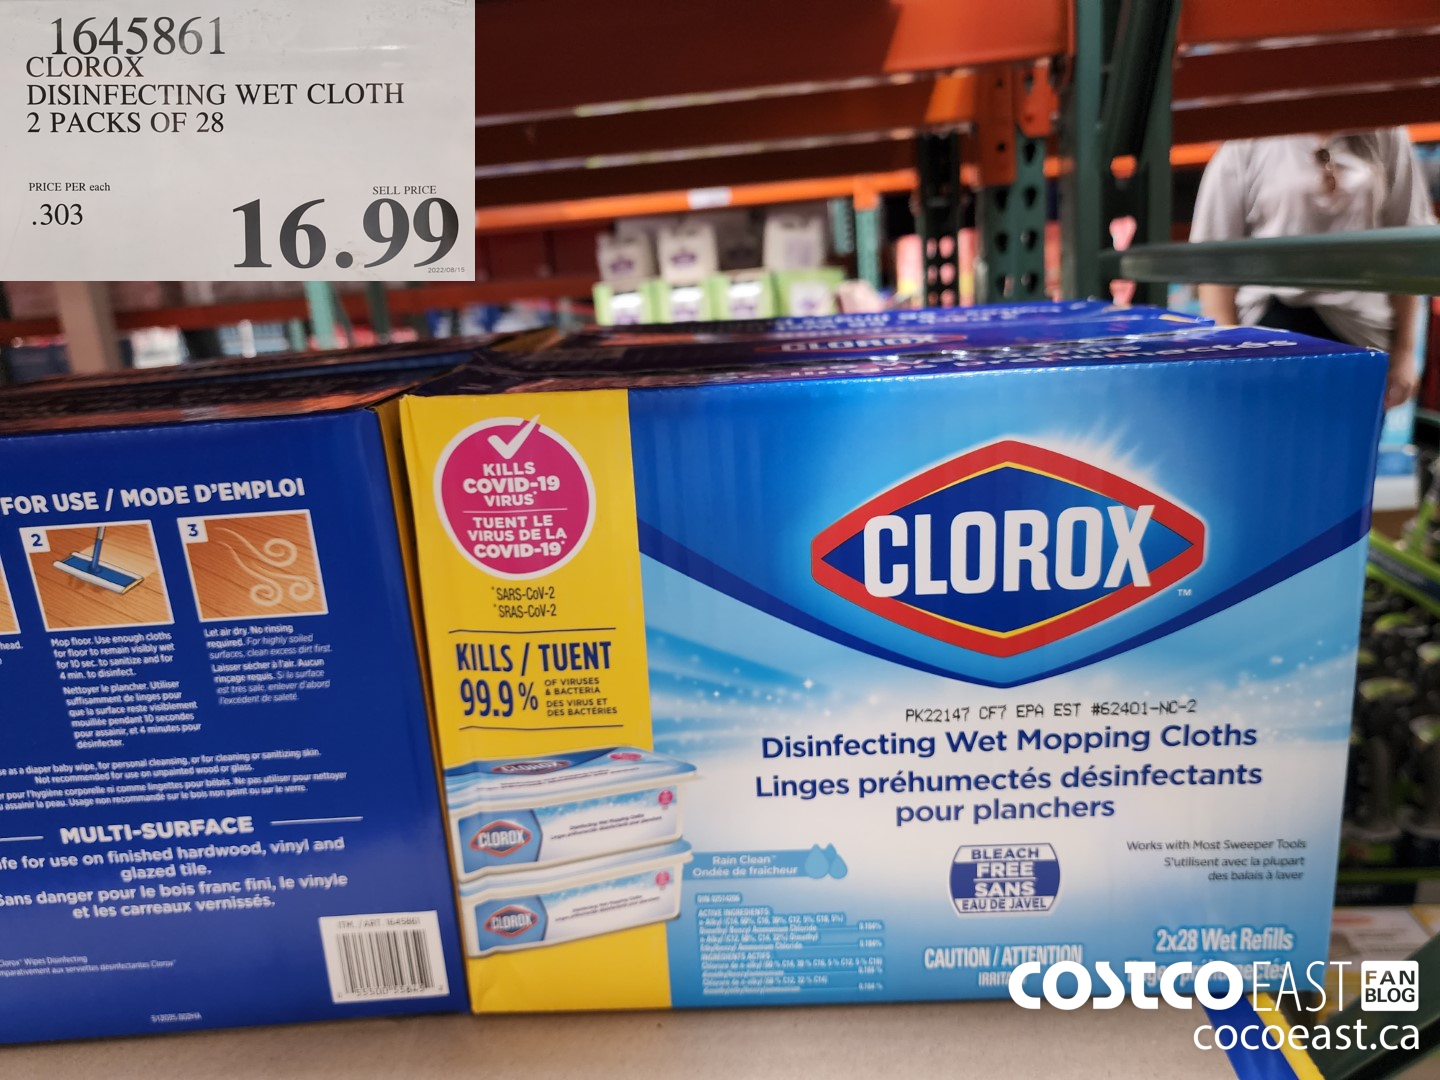 1508864 clorox microfiber dishcloth 12 x12 8pk 3 00 instant savings expires  on 2021 08 08 8 99 - Costco East Fan Blog